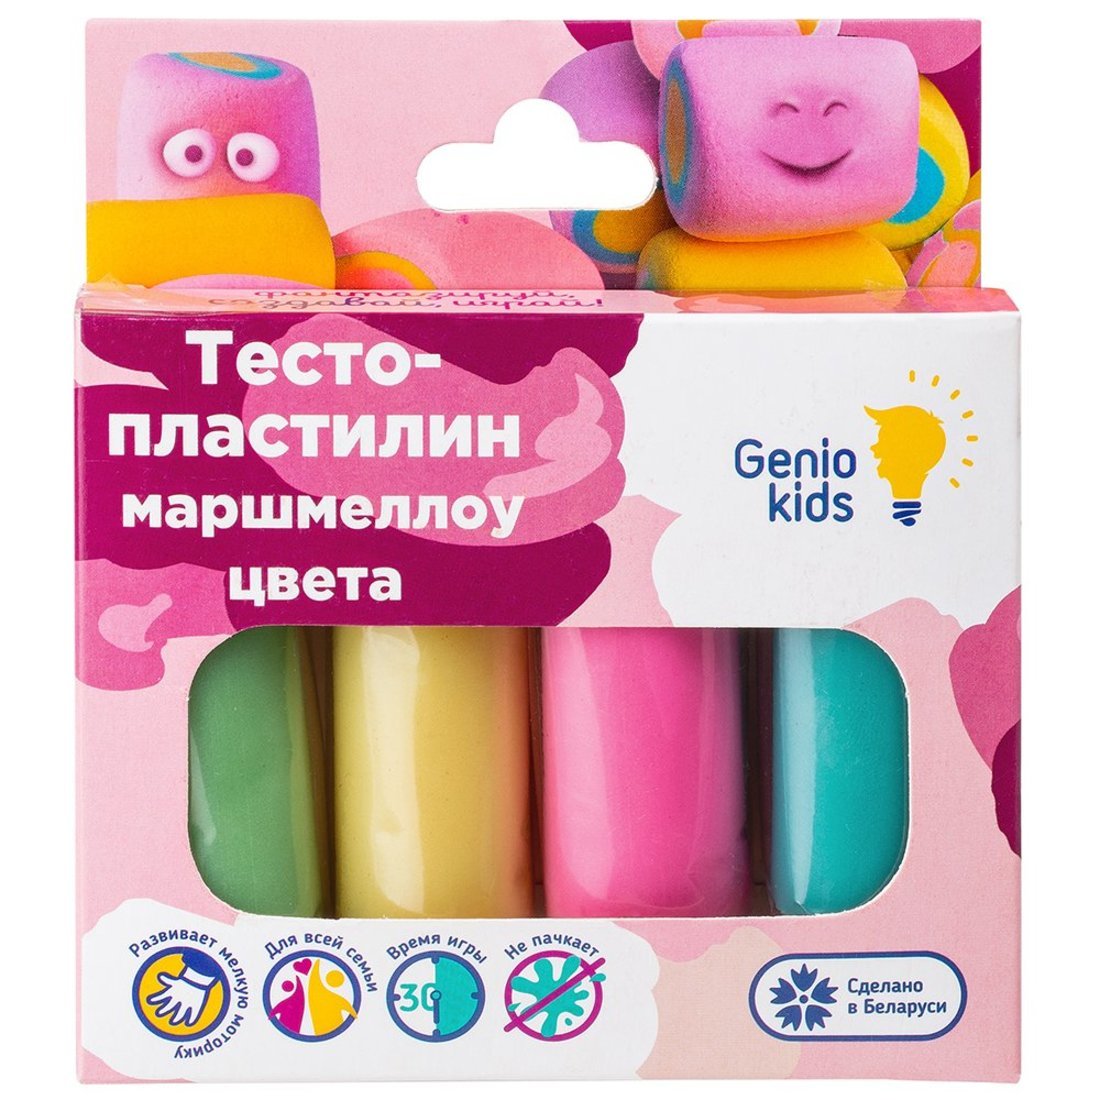 Набор для детской лепки Тесто-пластилин 4 цвета Маршмеллоу цвета